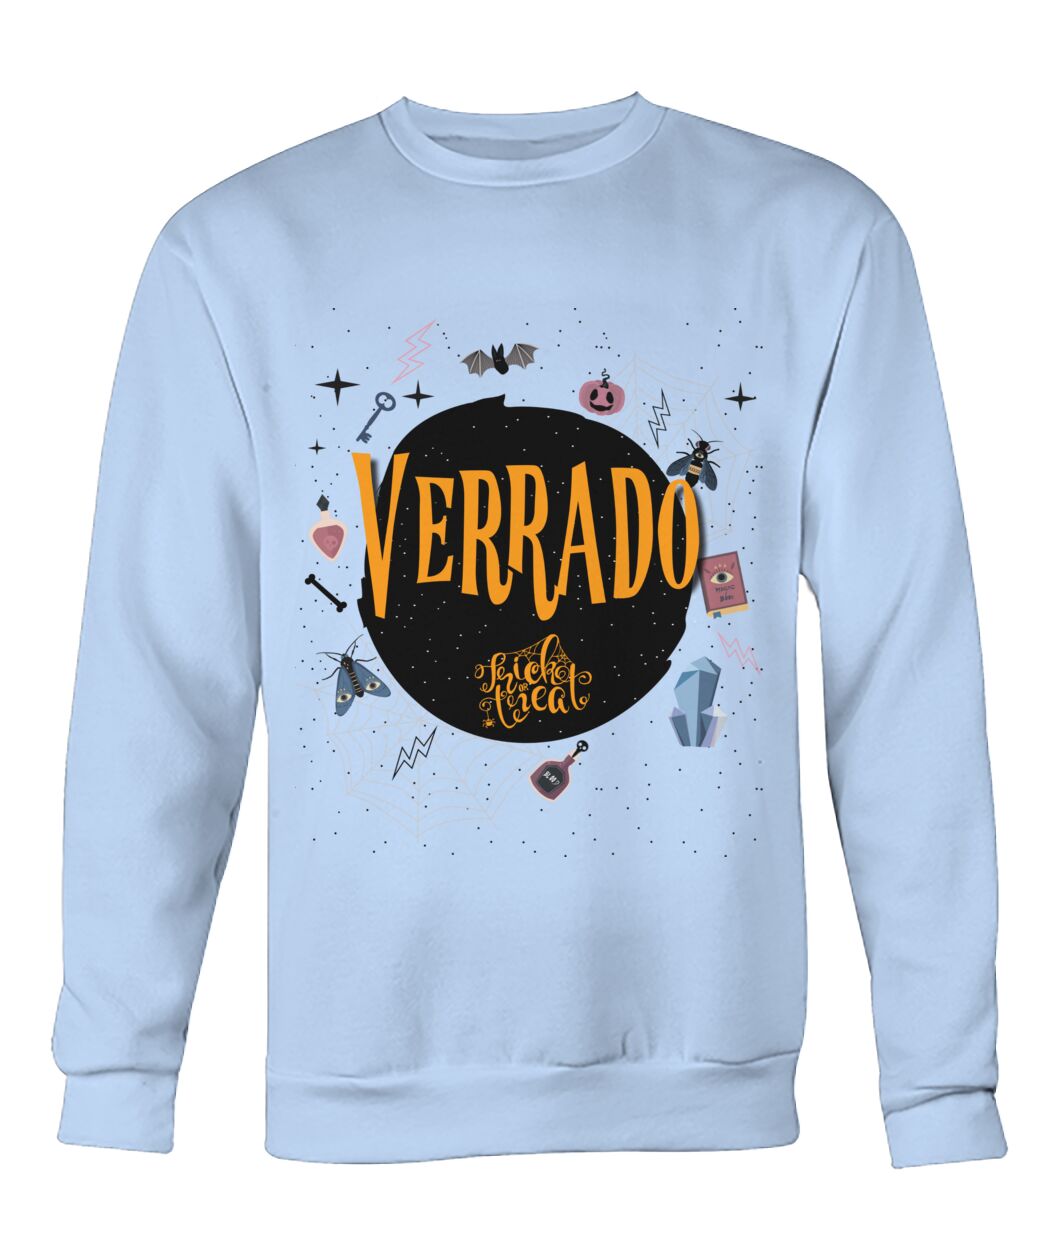 Verrado Trick or Treat Sweatshirt (2021) Crew Neck Sweatshirt